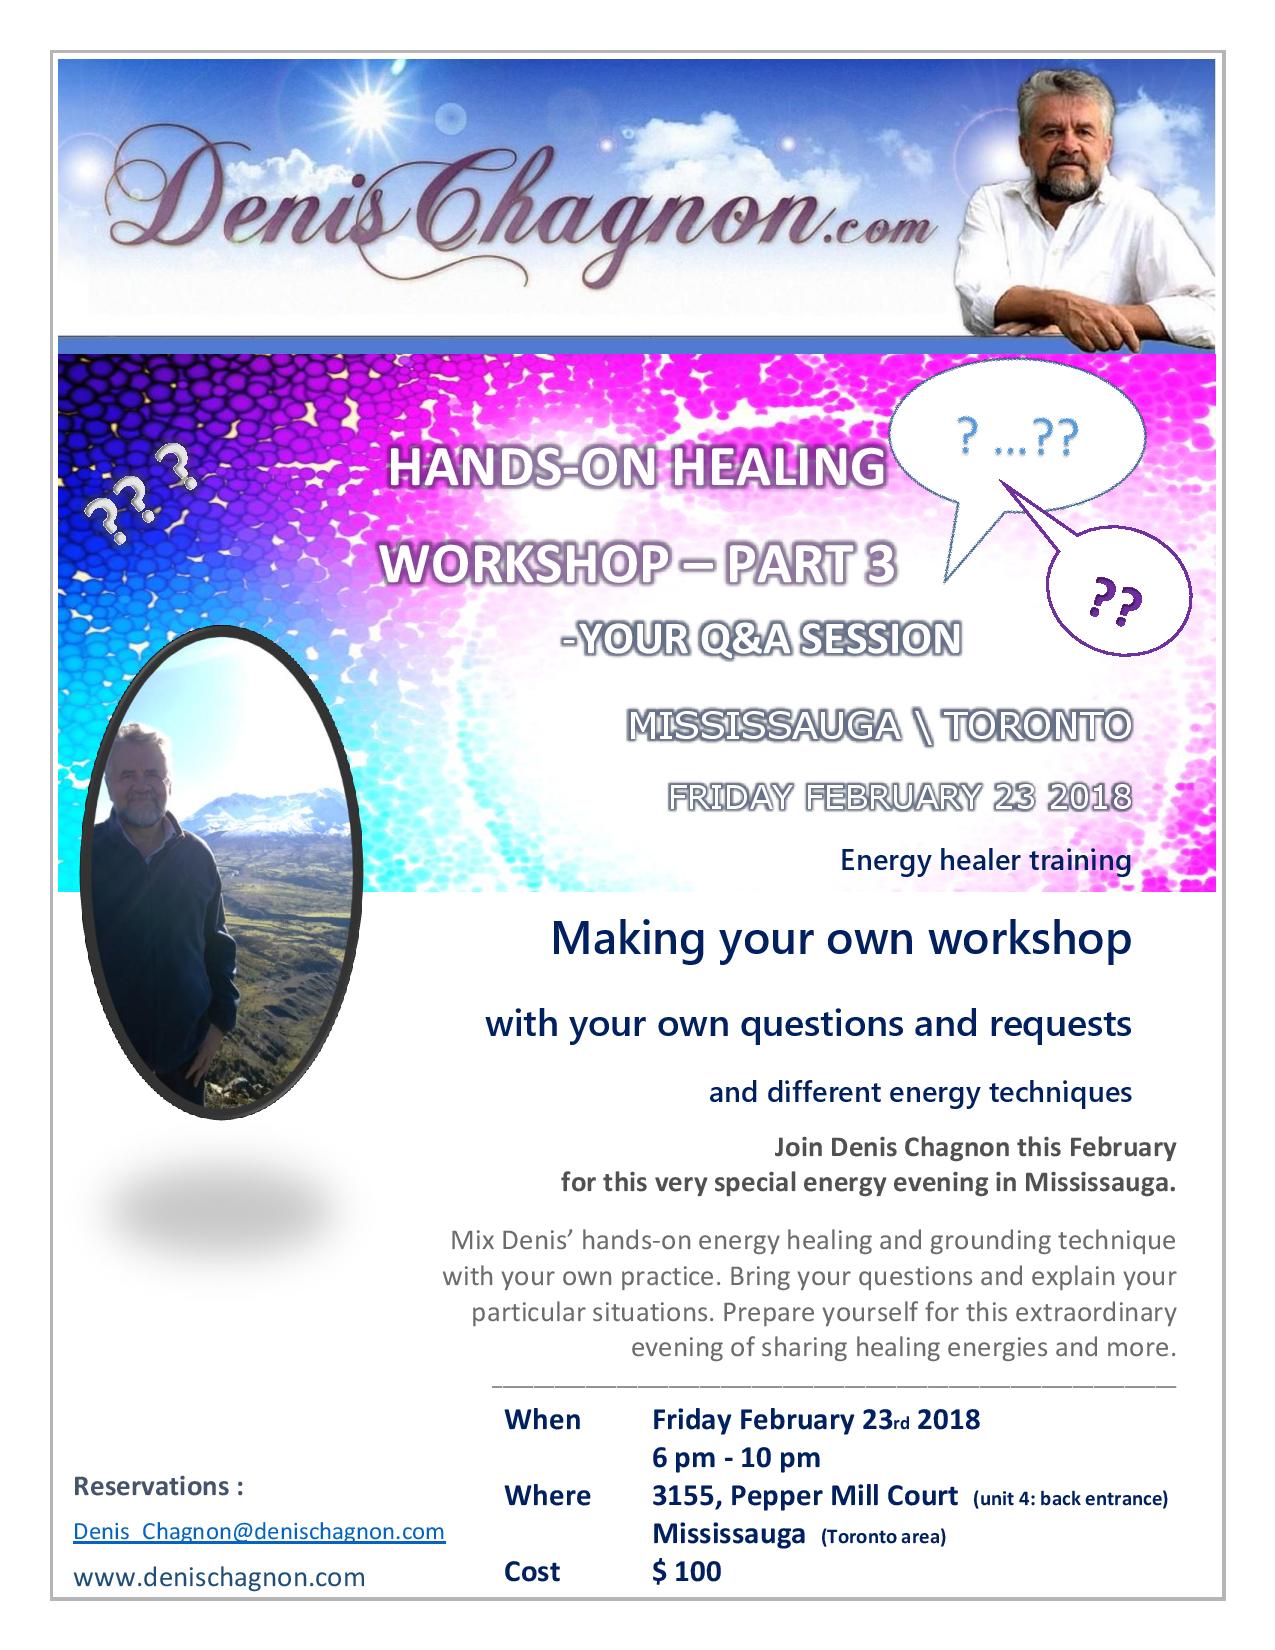 Energy hands-on healing workshop Mississauga Ontario